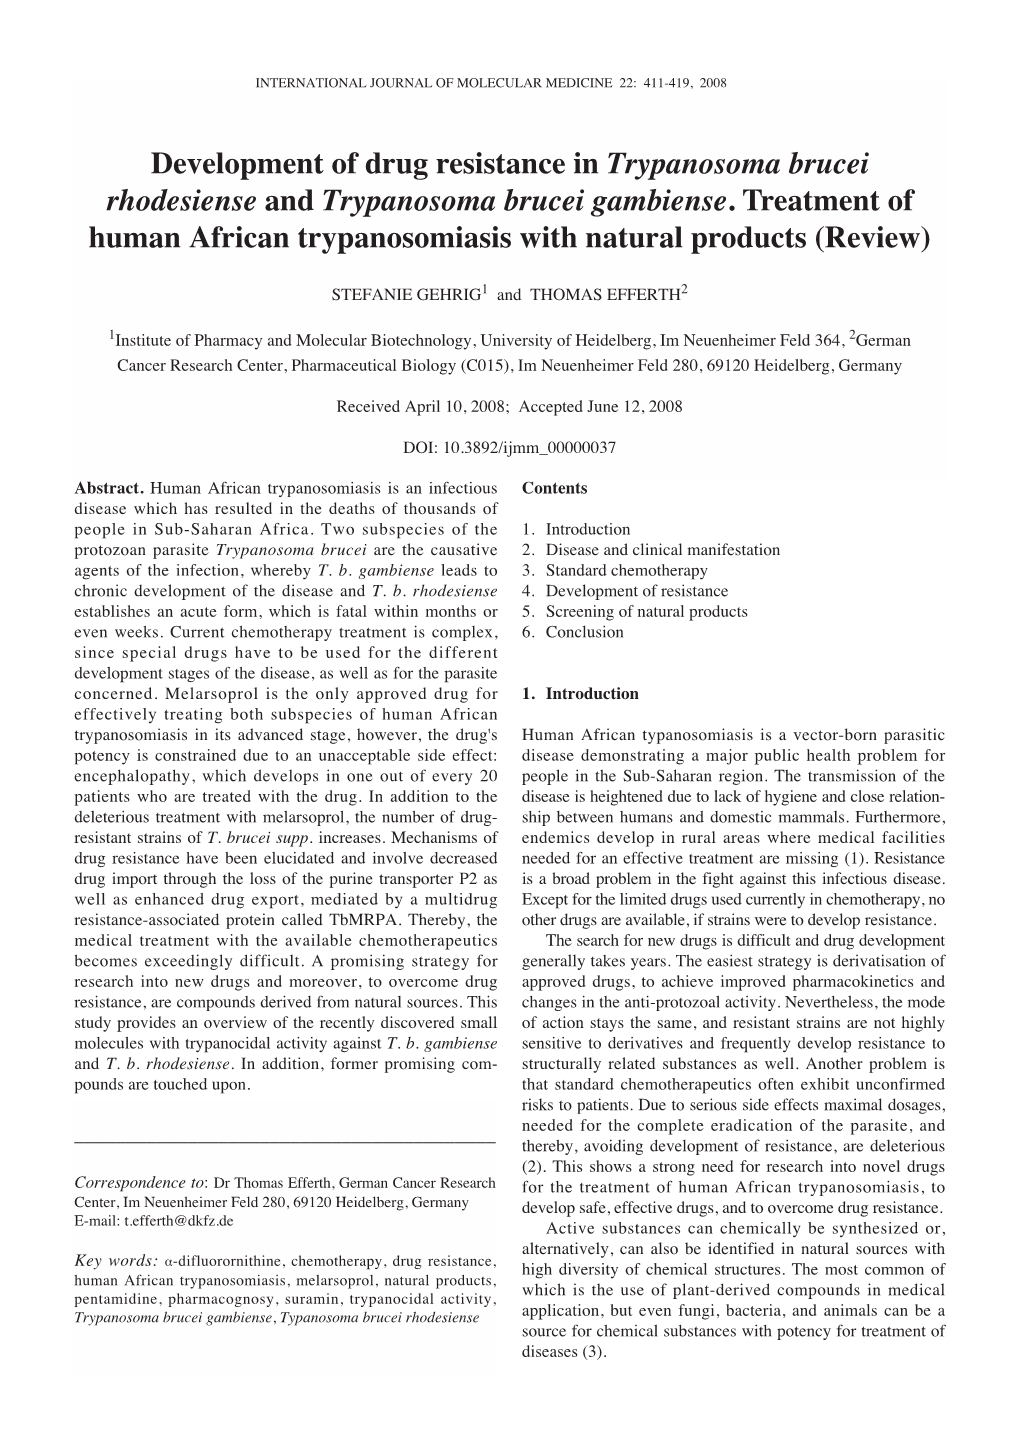 Development of Drug Resistance in Trypanosoma Brucei Rhodesiense and Trypanosoma Brucei Gambiense